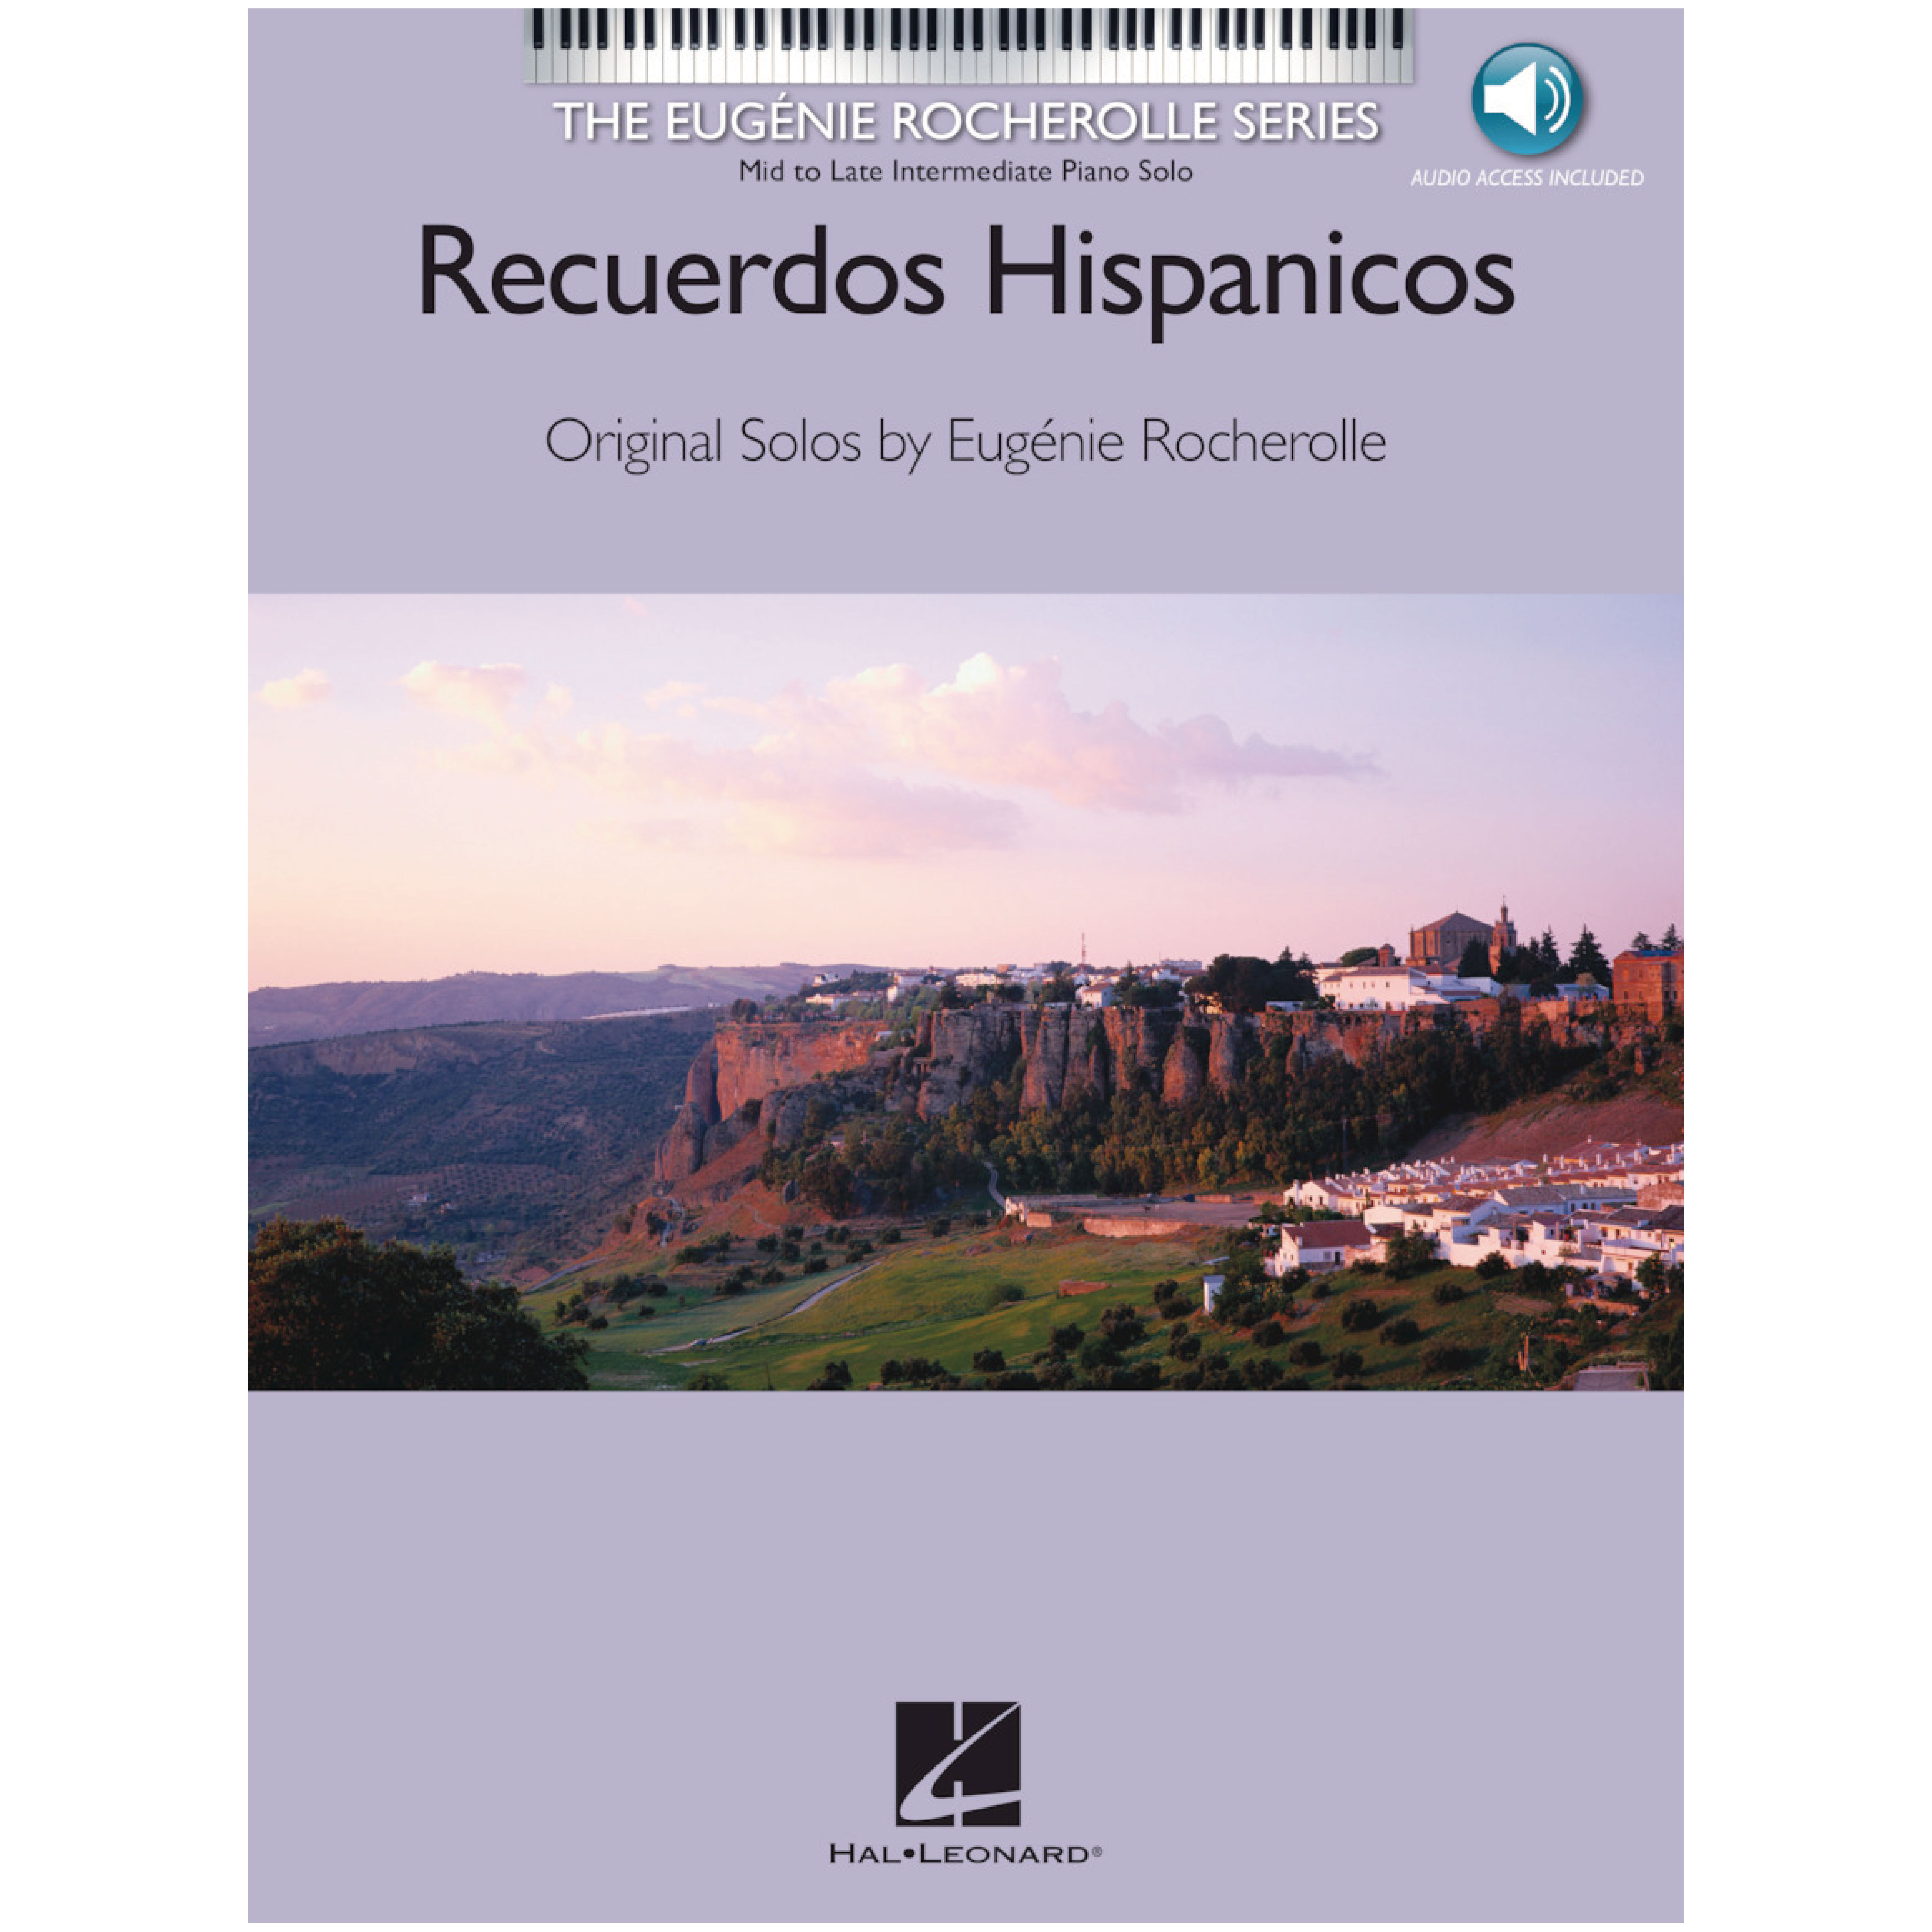 Recuerdos hispanicos - Spanish Memories